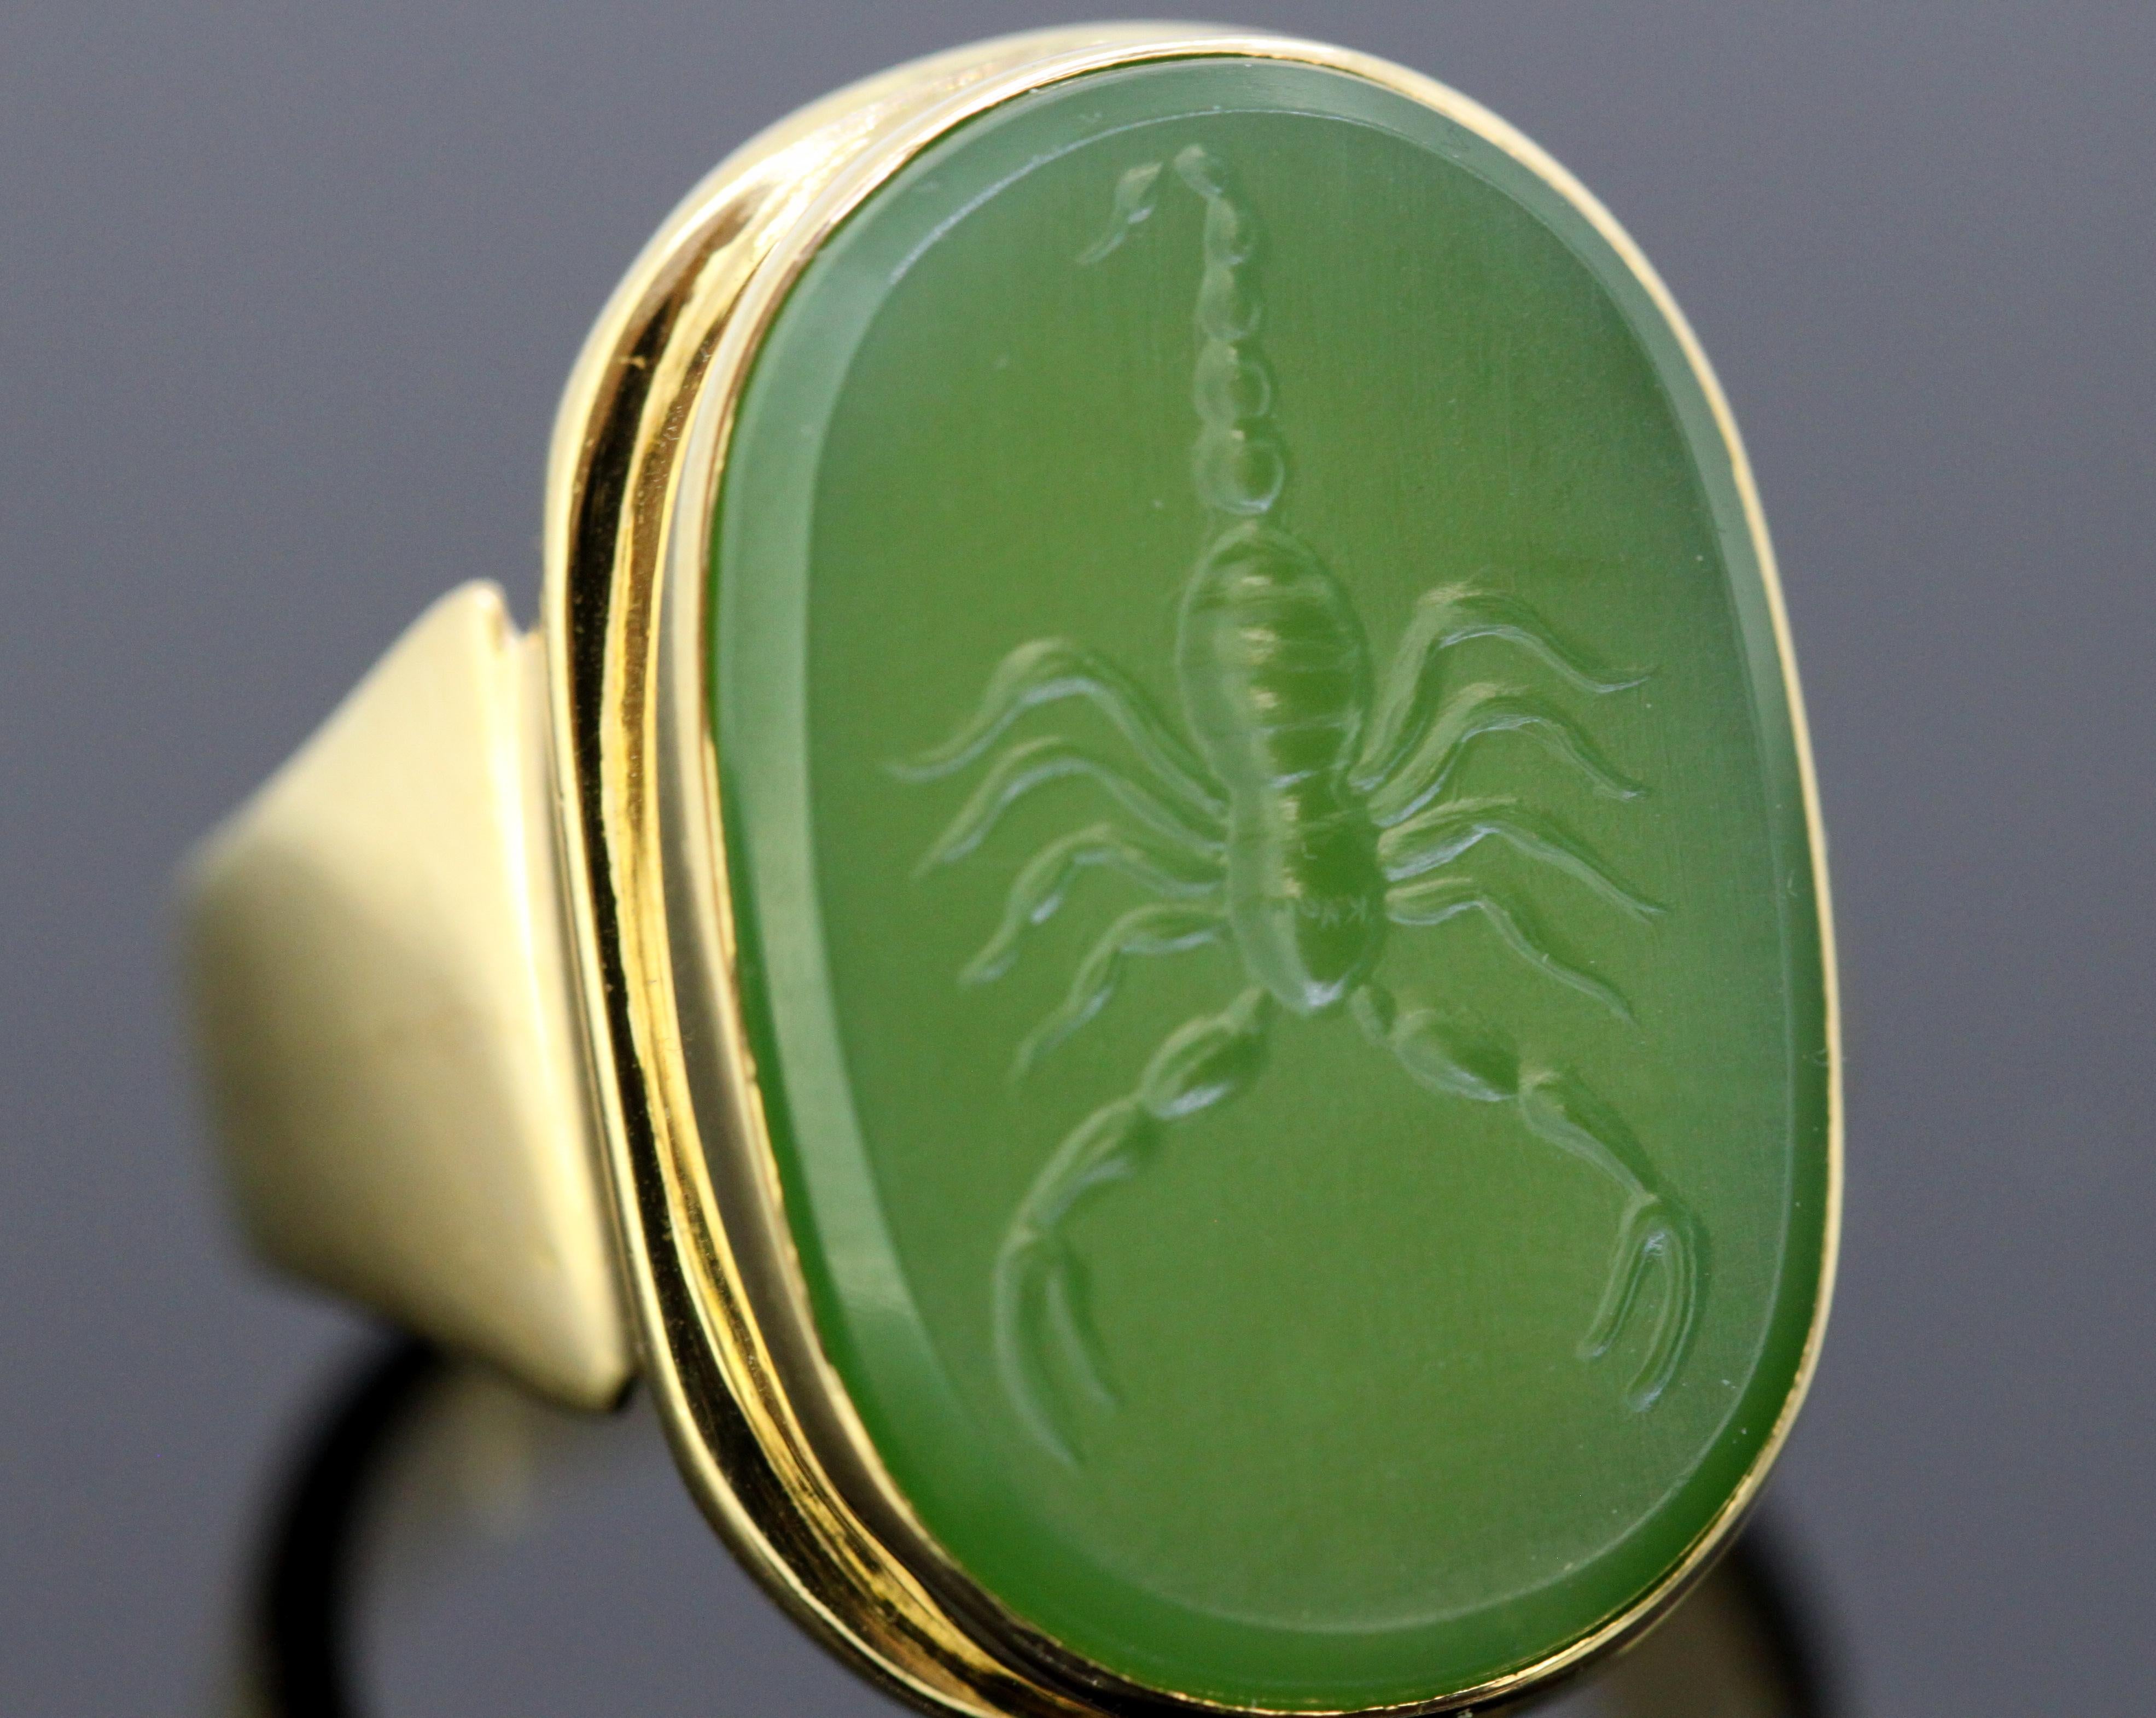 18 Karat Gold Ring with Scorpion / Scorpio Natural Jade Carving 2